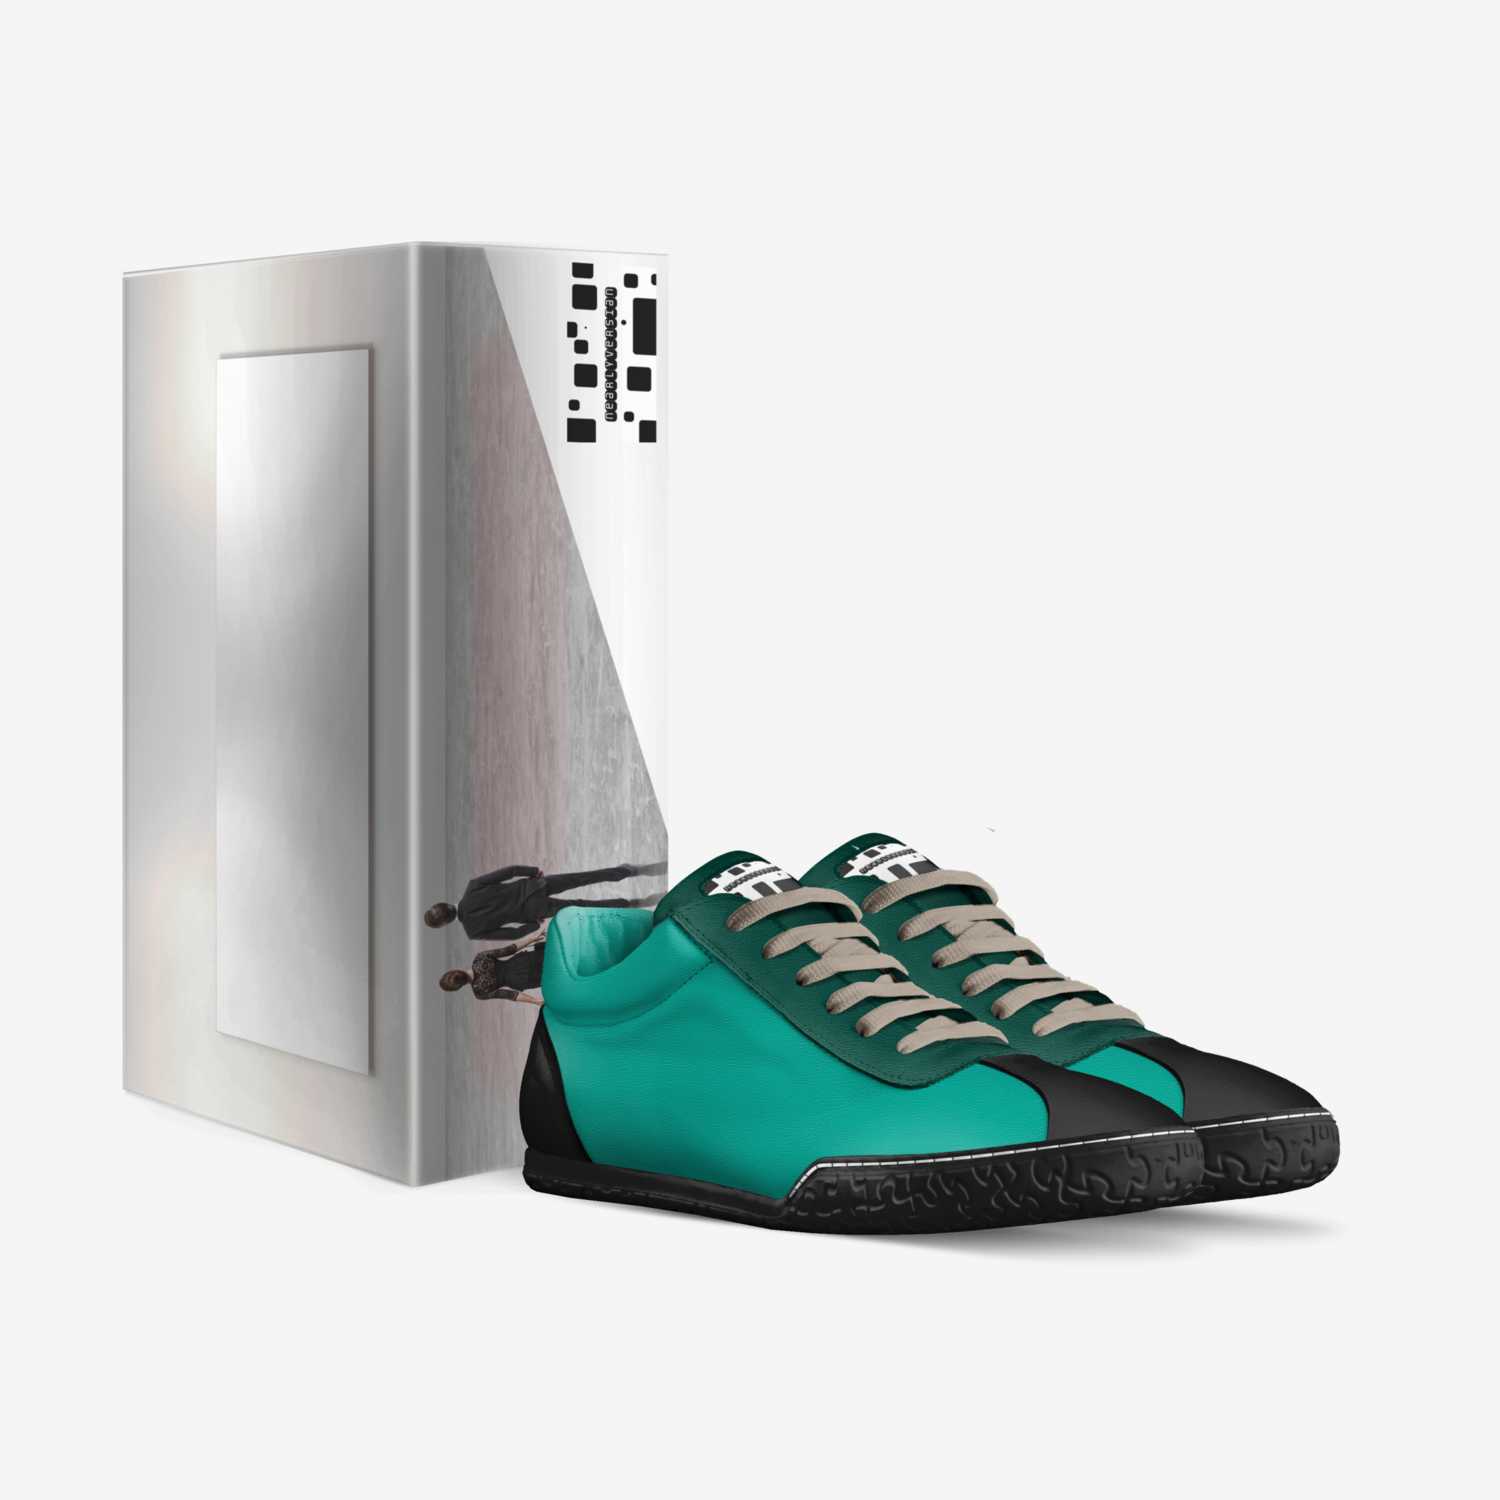 Nearlyversian custom made in Italy shoes by Aaron Heffernan | Box view